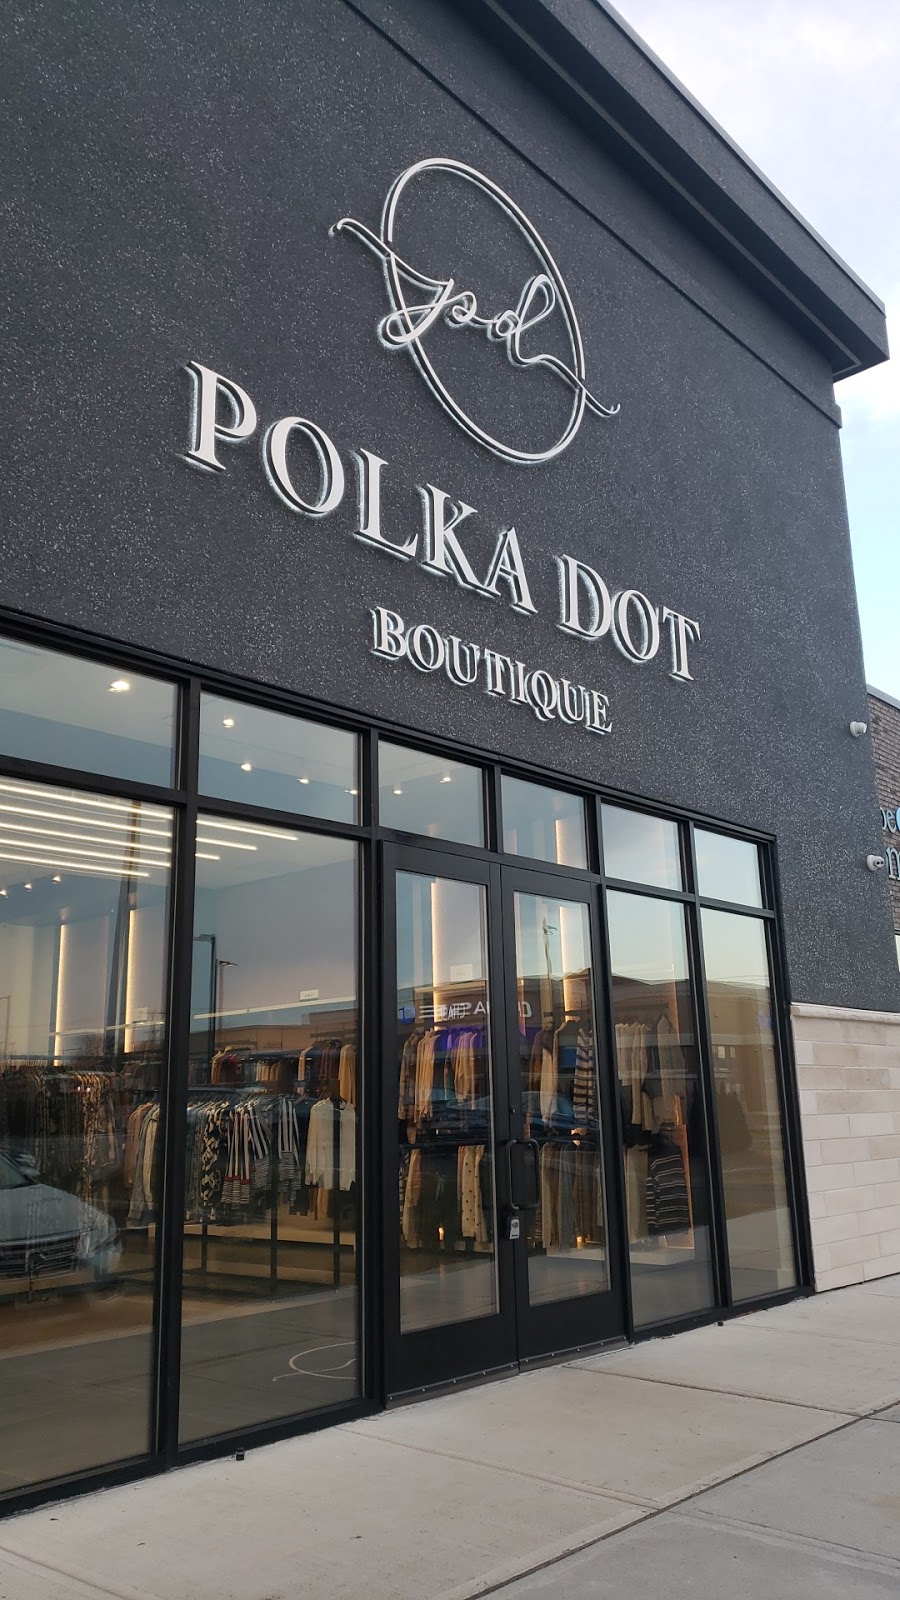 Polka Dot Boutique | 1797 Ave of the States, Lakewood, NJ 08701 | Phone: (732) 364-6081